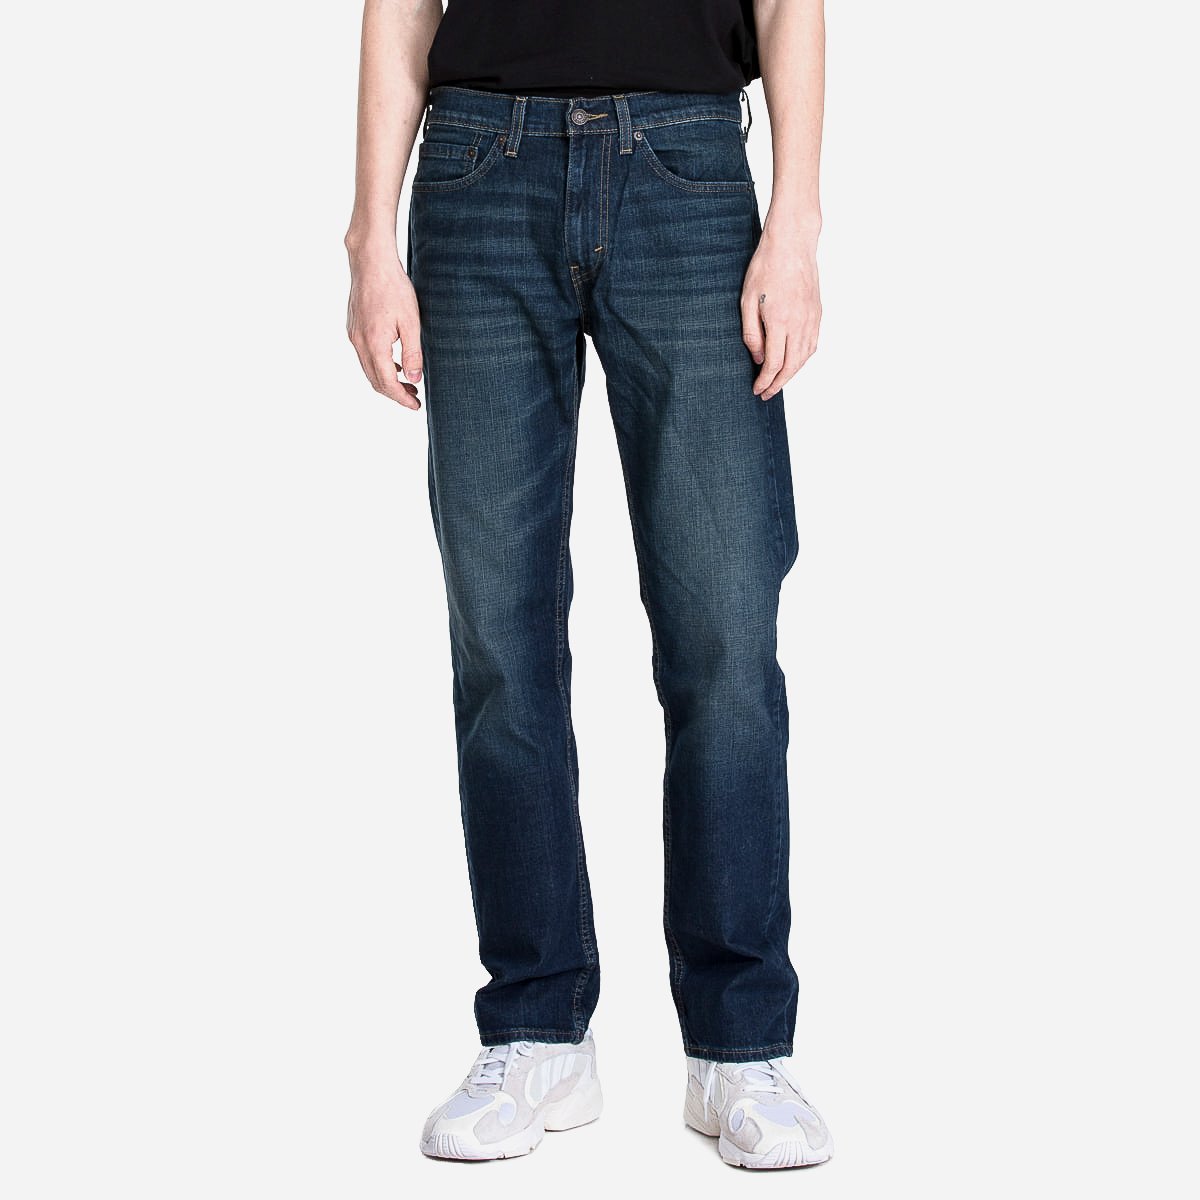 Levi's Men's 505 Regular Jeans in Seeped Indigo